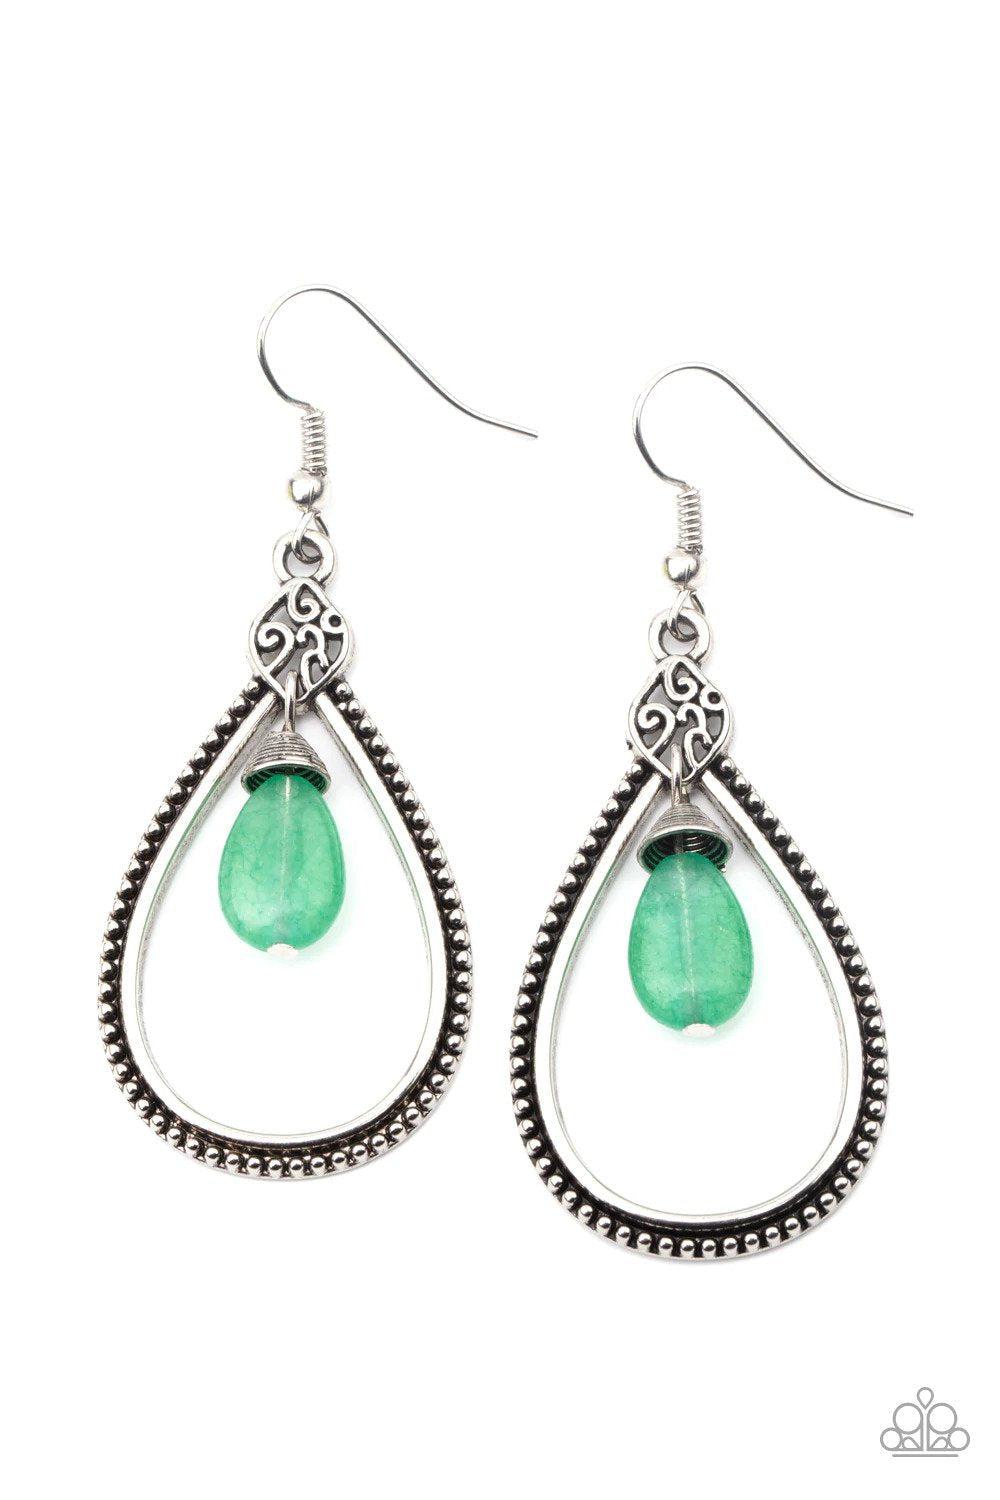 I&#39;ll Believe It ZEN I See It Green Earrings - Paparazzi Accessories- lightbox - CarasShop.com - $5 Jewelry by Cara Jewels